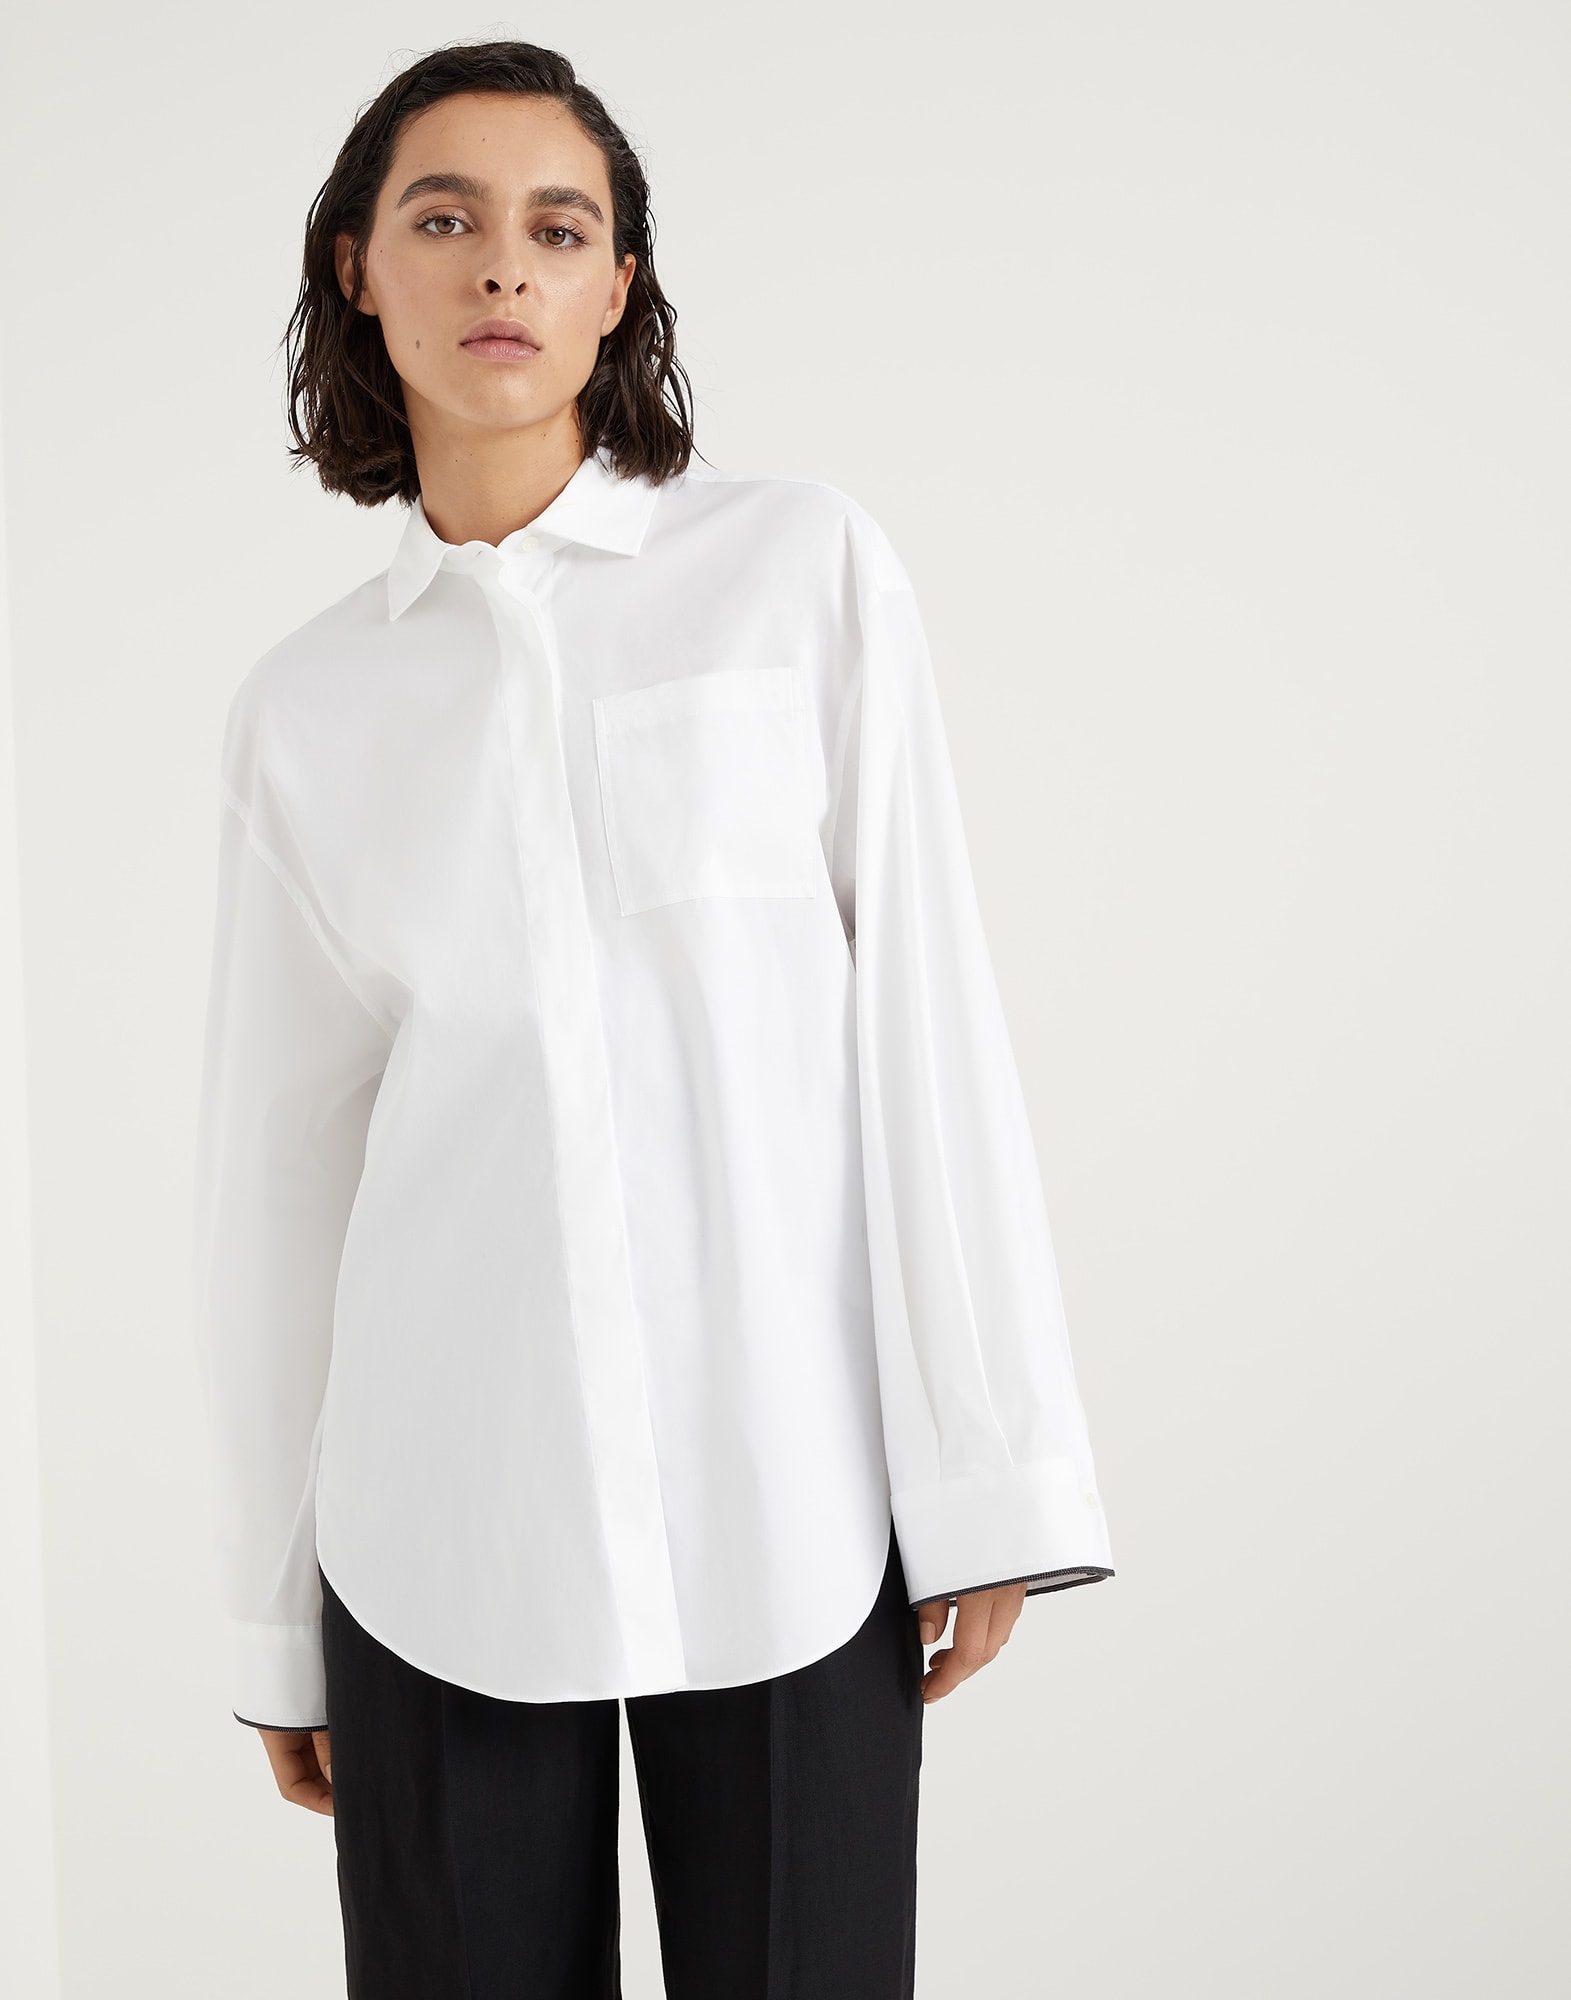 Cotton Shirt - Front view